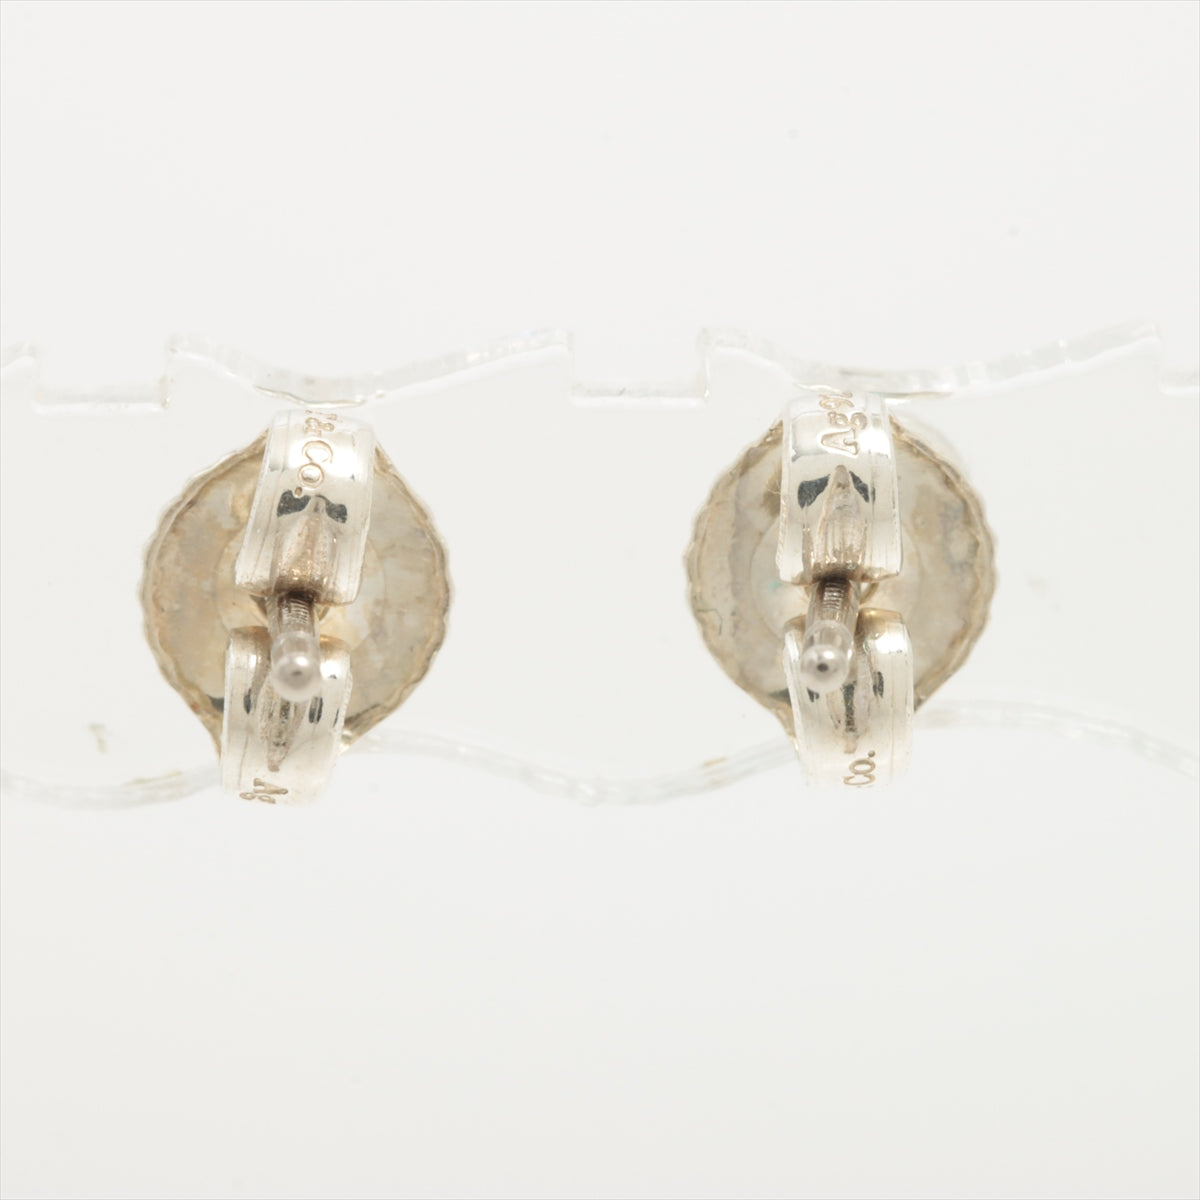 Tiffany Kolor By the Yard Piercing jewelry (for both ears) 925 1.0g Silver Aquamarine